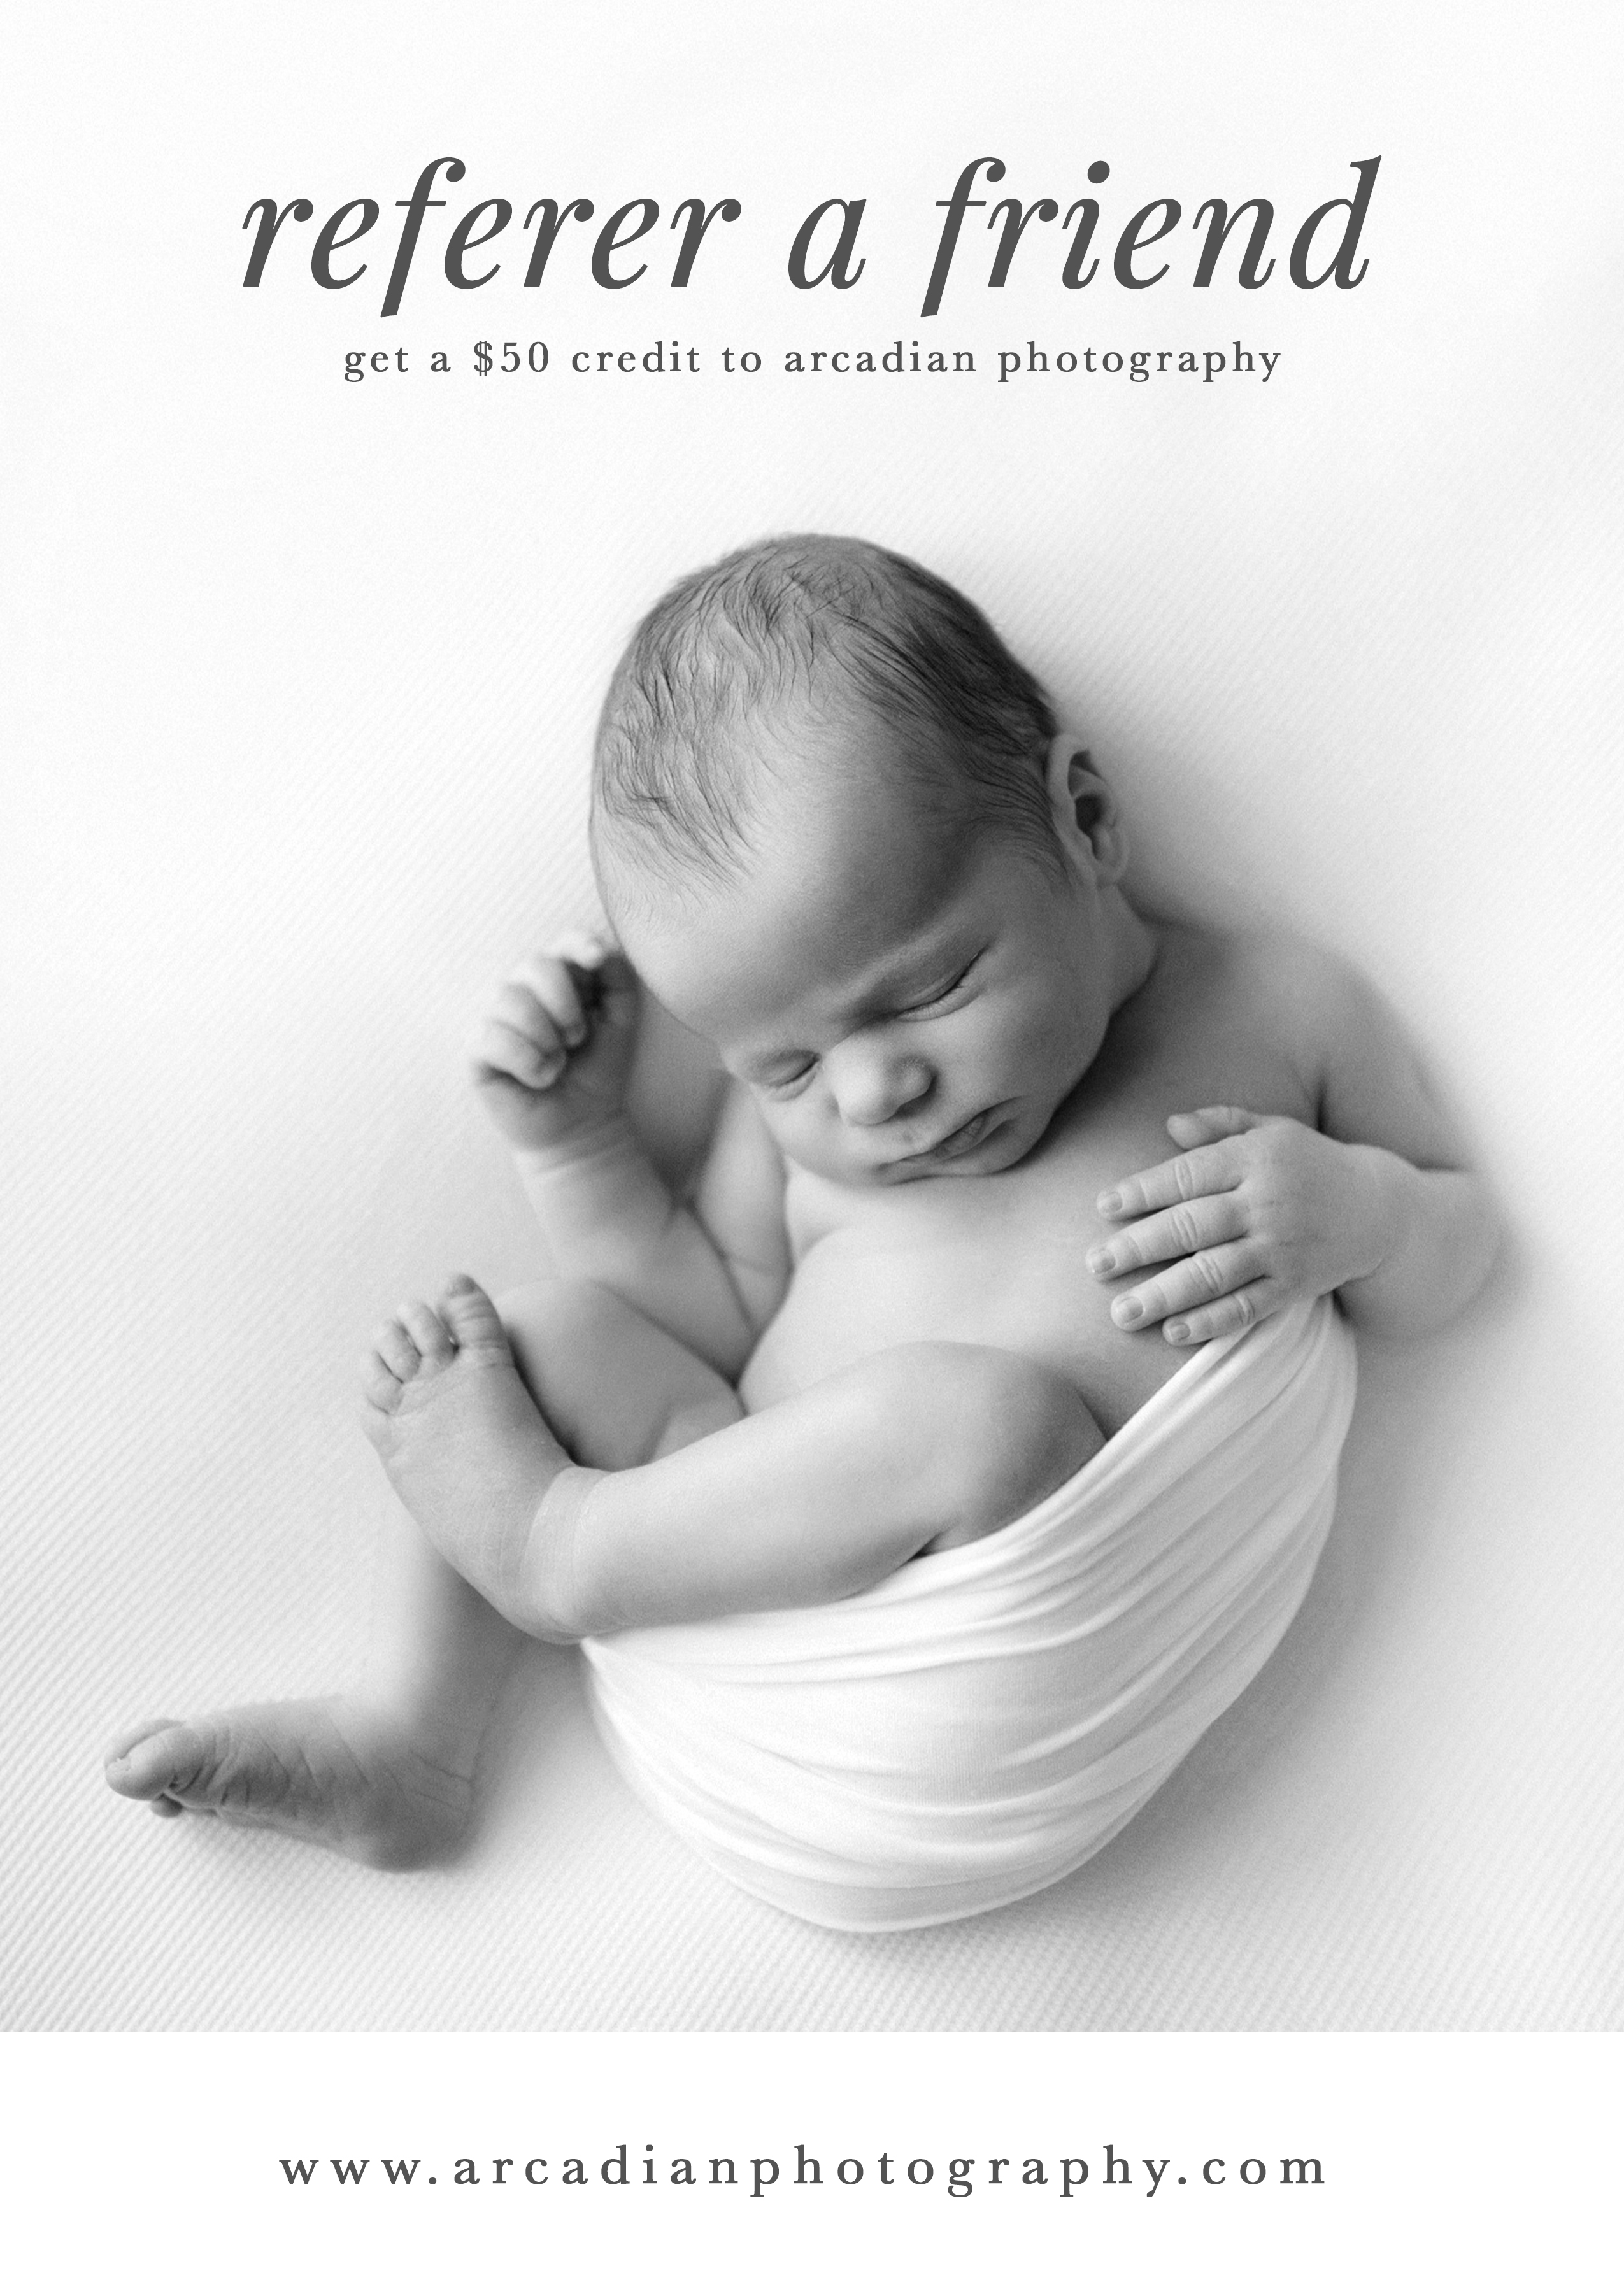 Portland Newborn Photographer, Arcadian Photography, offers a referral program